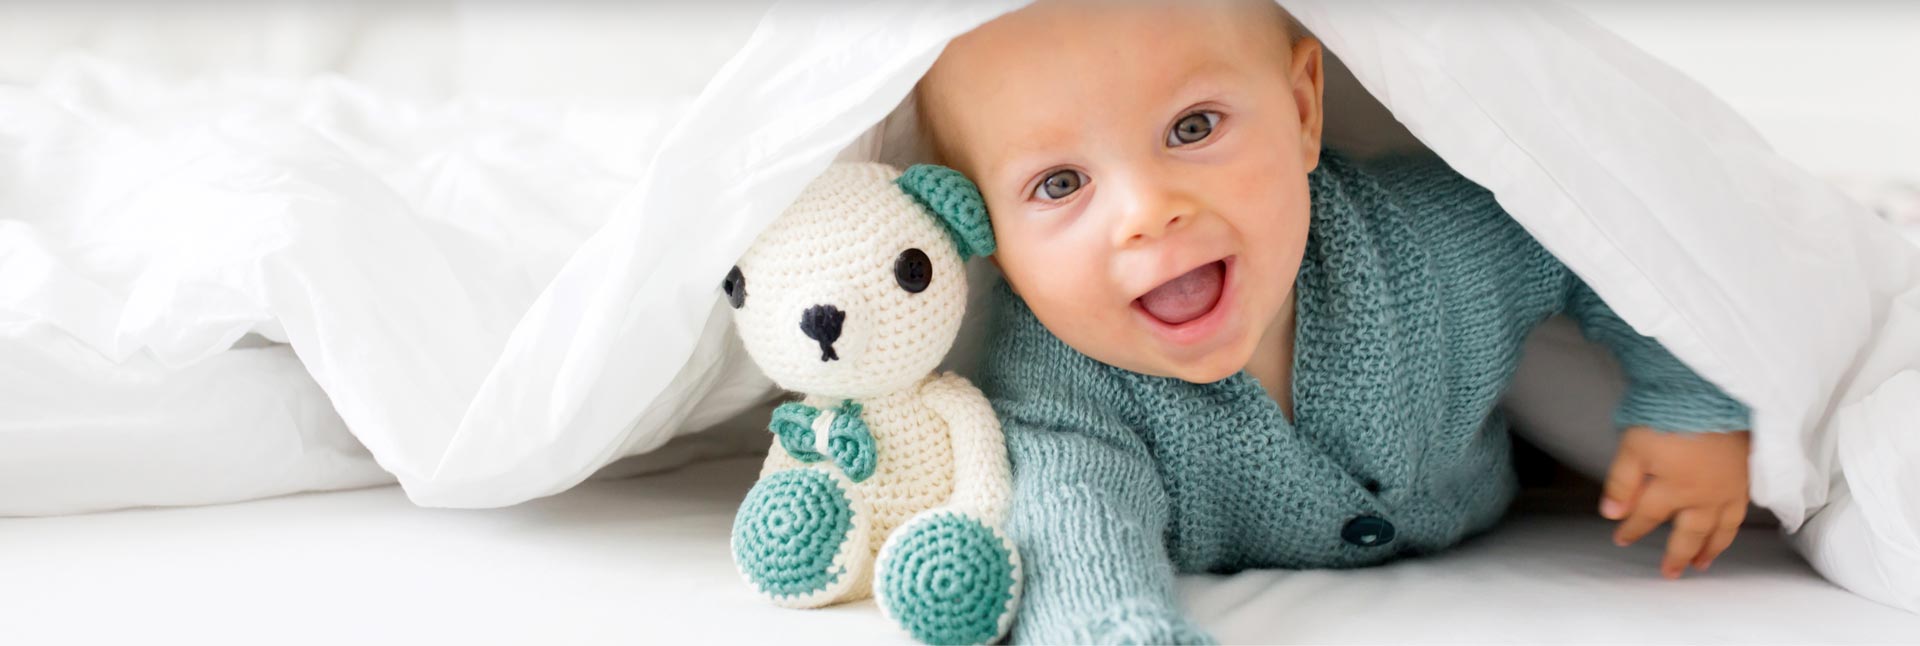 Caring for infants and babies at Milestone Pediatrics | Waukesha Pediatricians